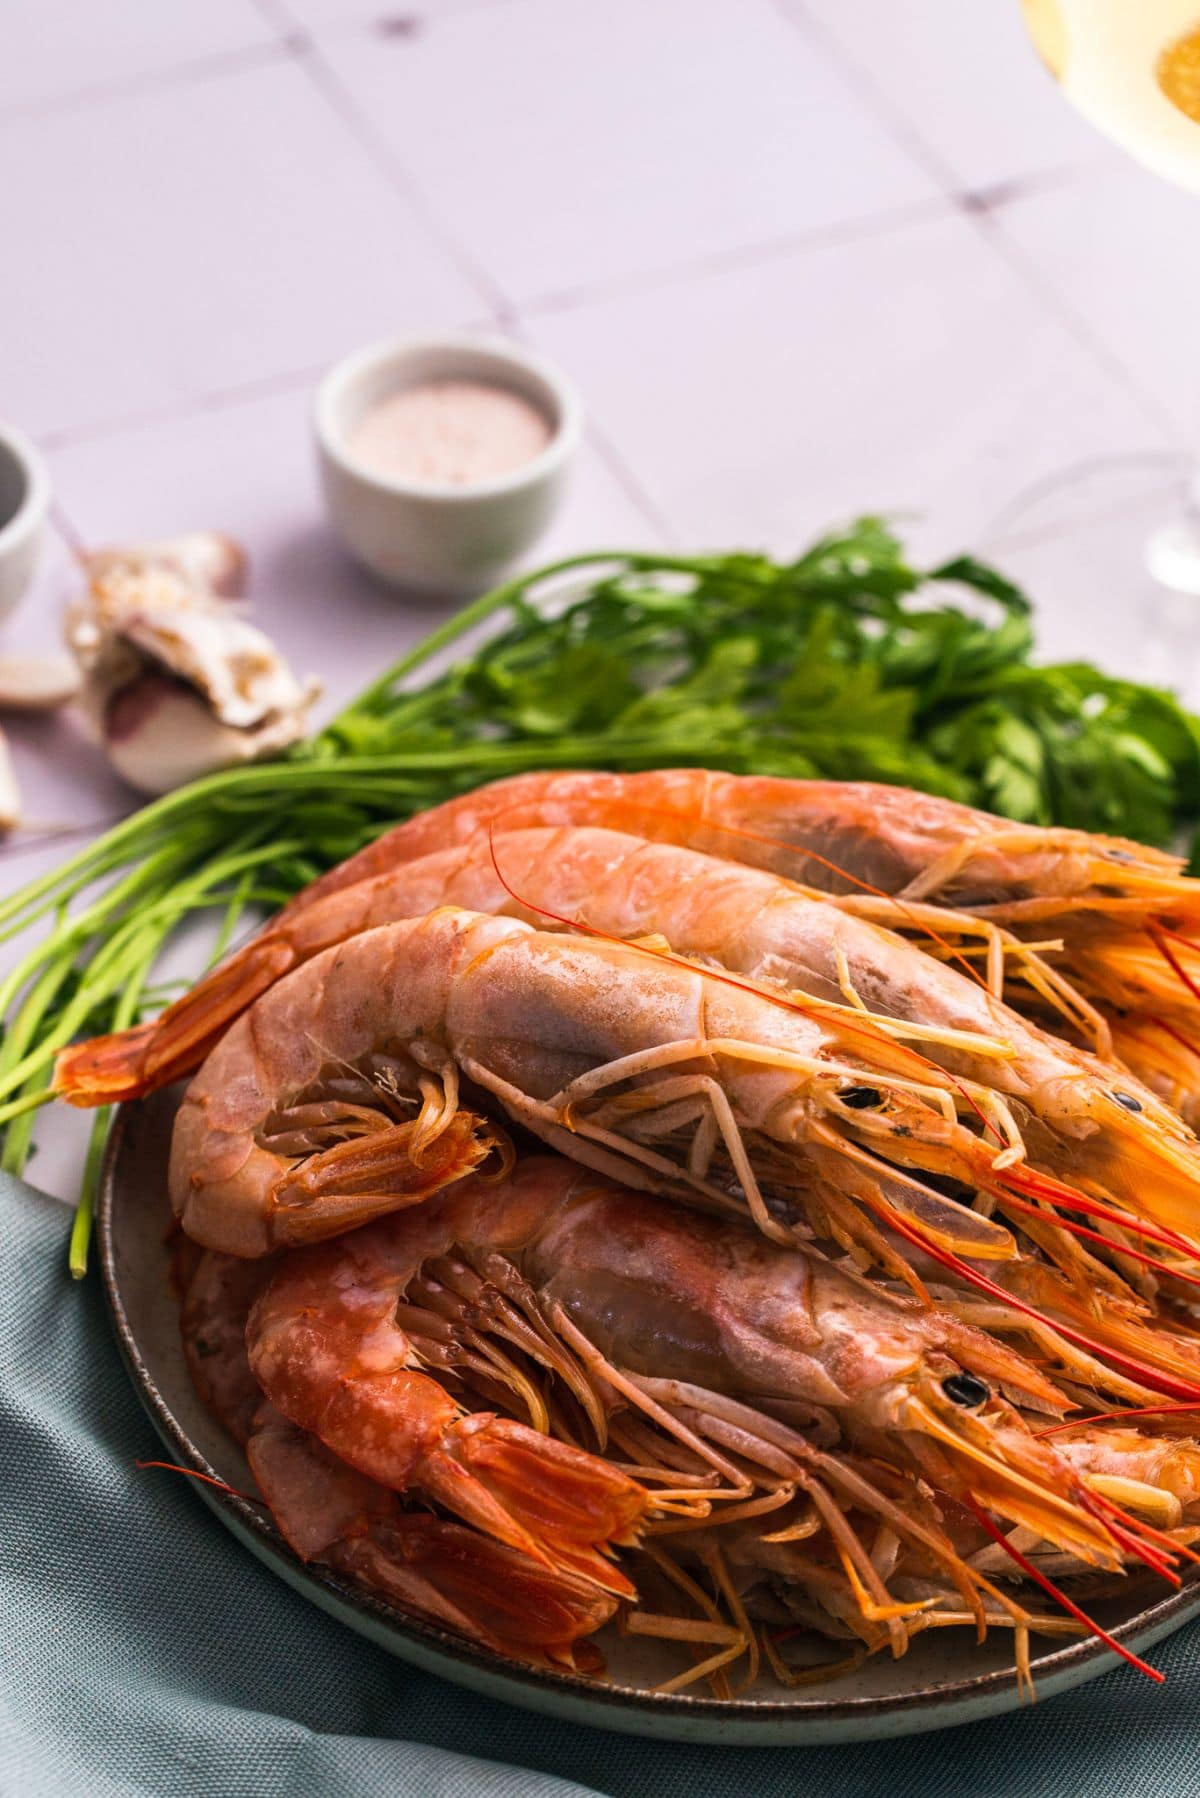 How to cook shrimp ingredients